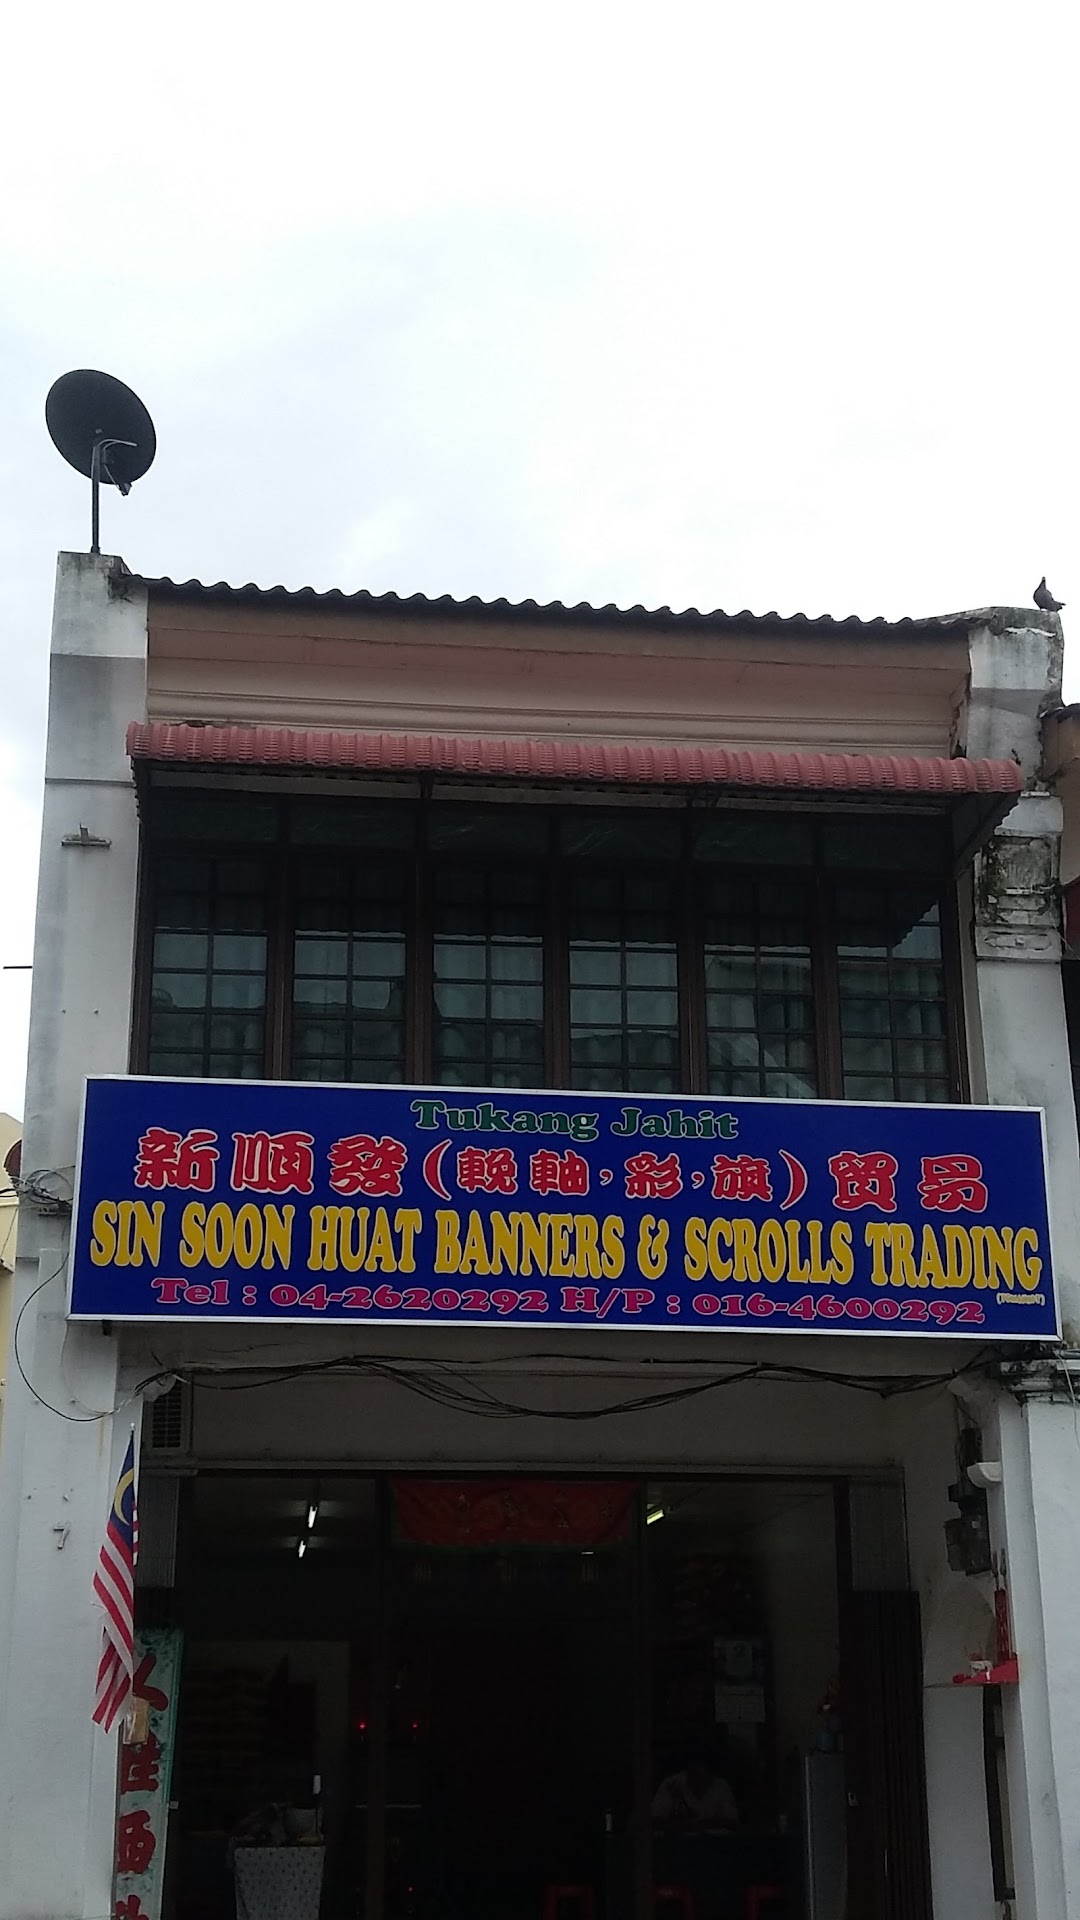 Sin Soon Huat Banners & Scrolls Trading